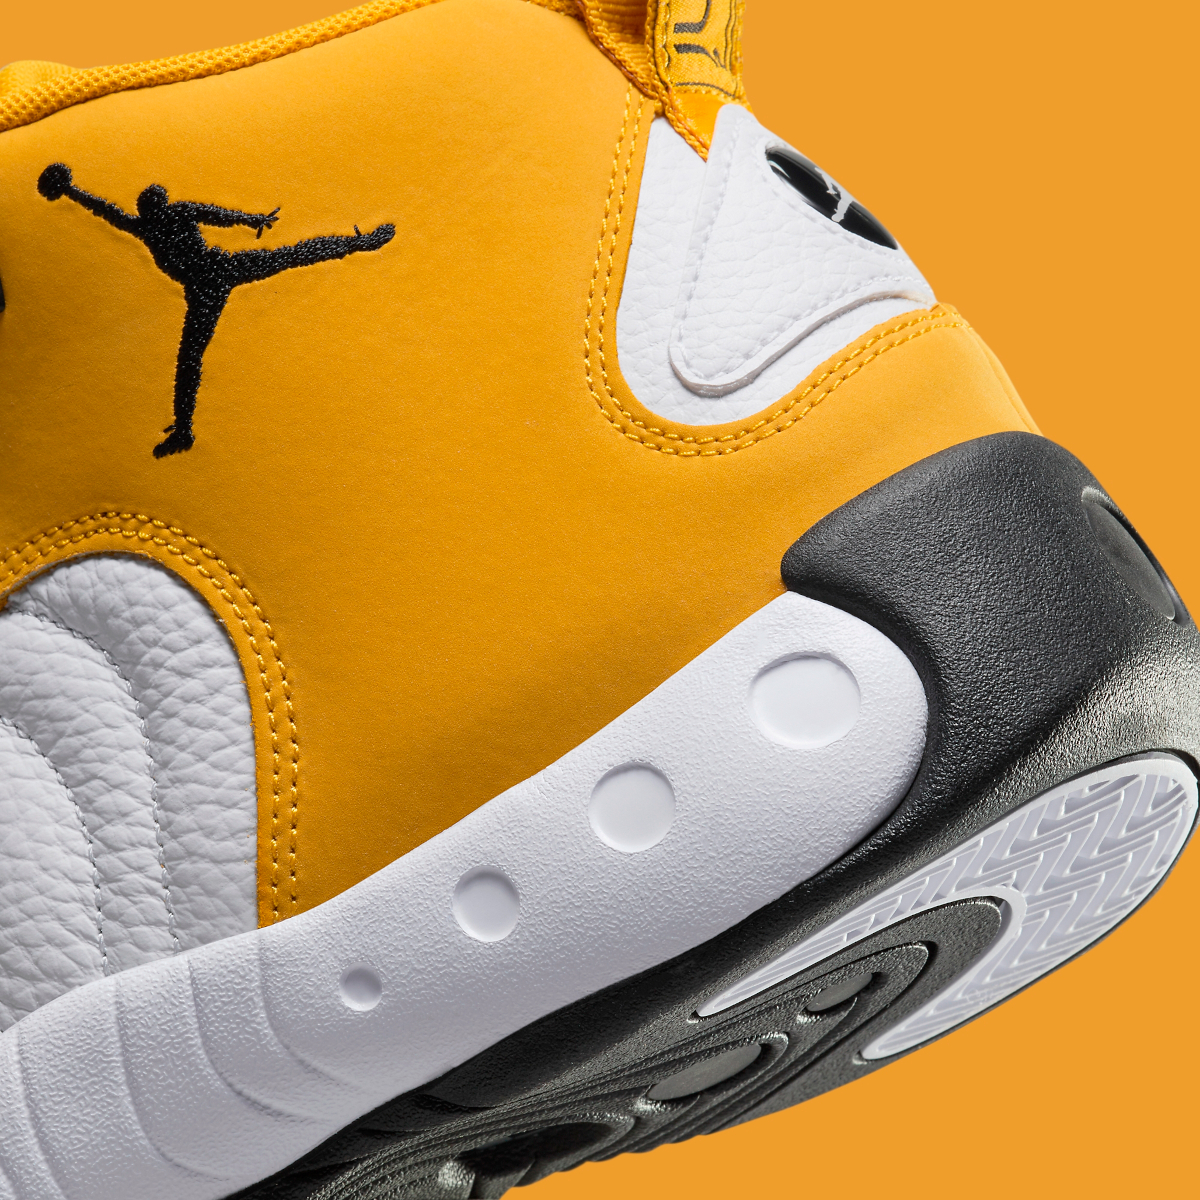 The Jordan Jumpman Pro Returns In Yellow | Sneaker News